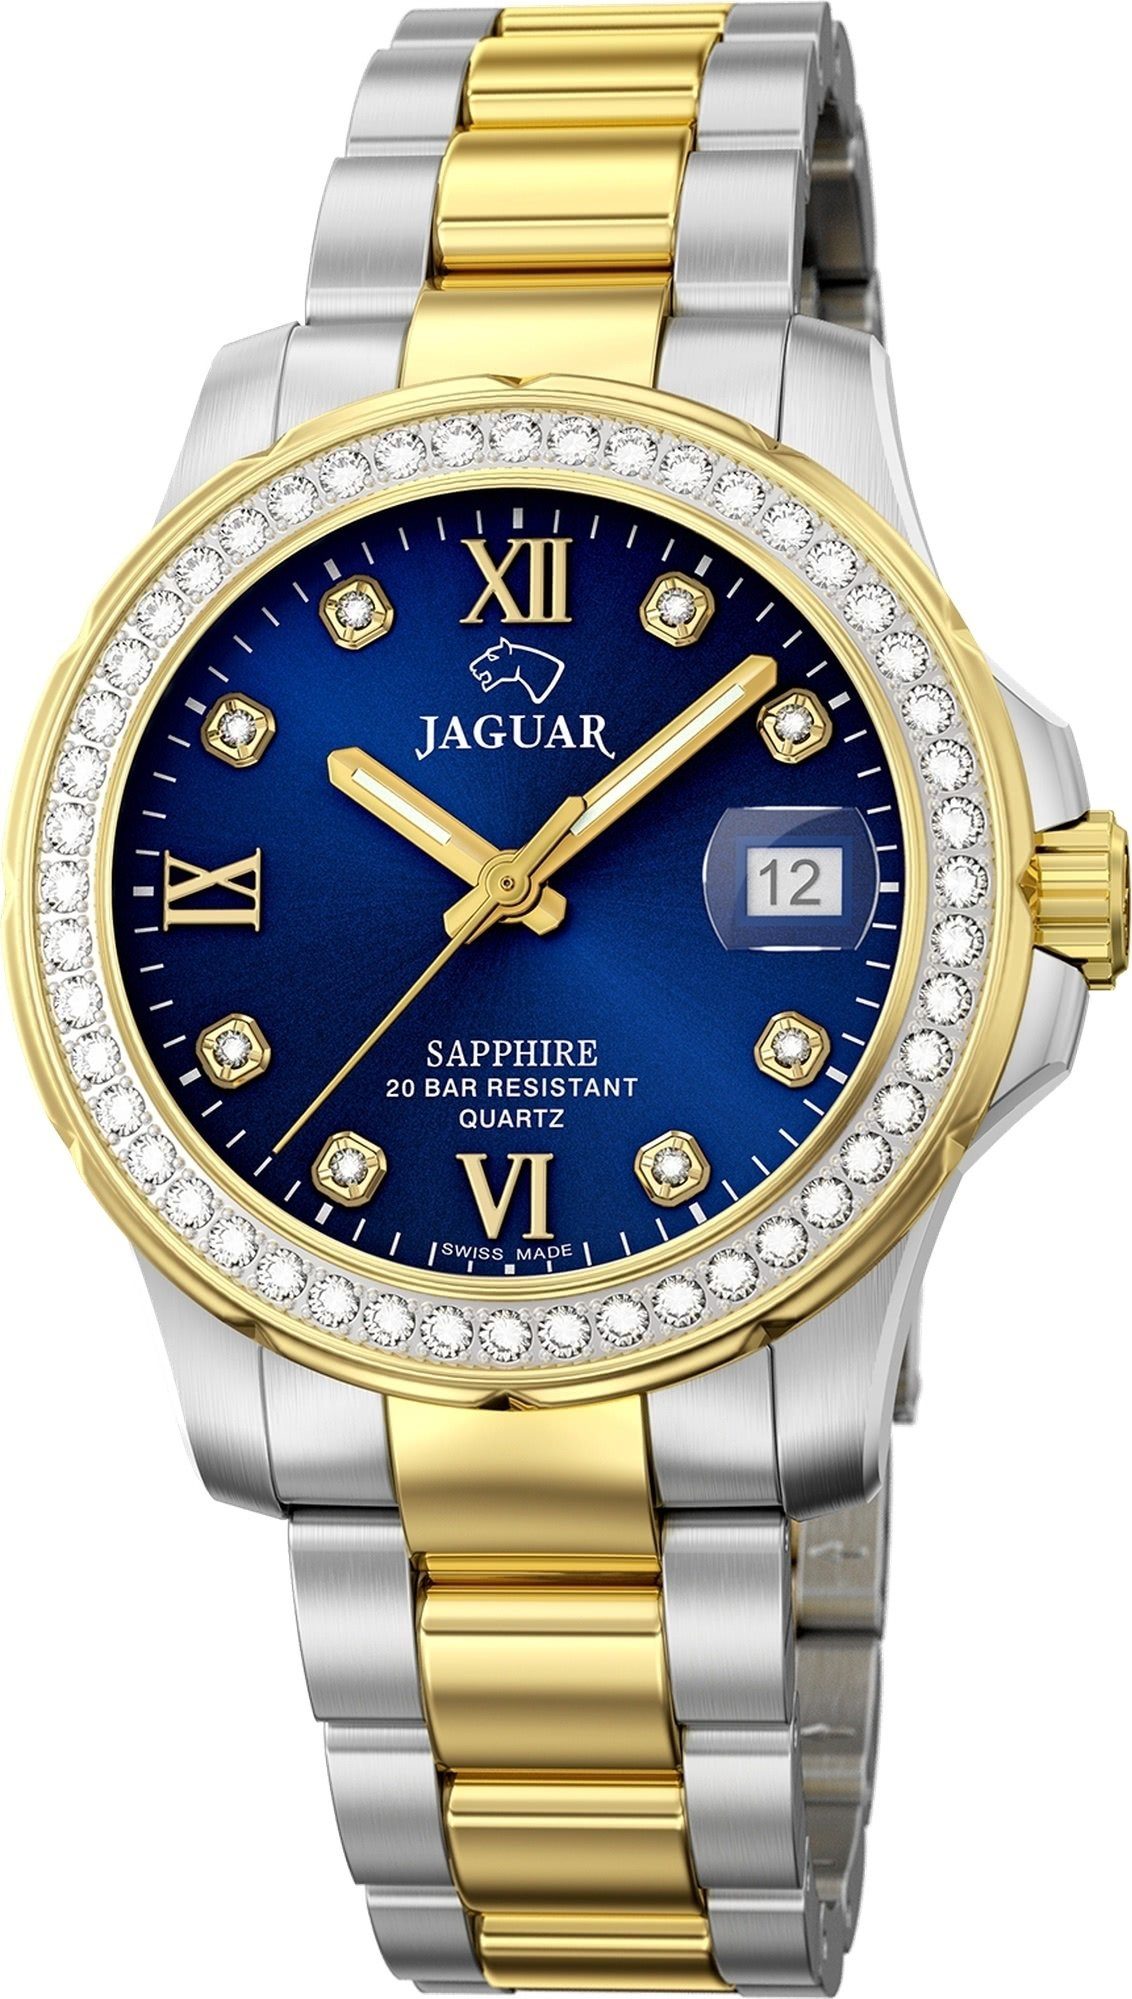 Damen Uhren Jaguar Quarzuhr UJ893/2 Jaguar Damen Armbanduhr Cosmopolitan, Damenuhr rund, mittel (ca. 34mm), Edelstahl, Edelstahl